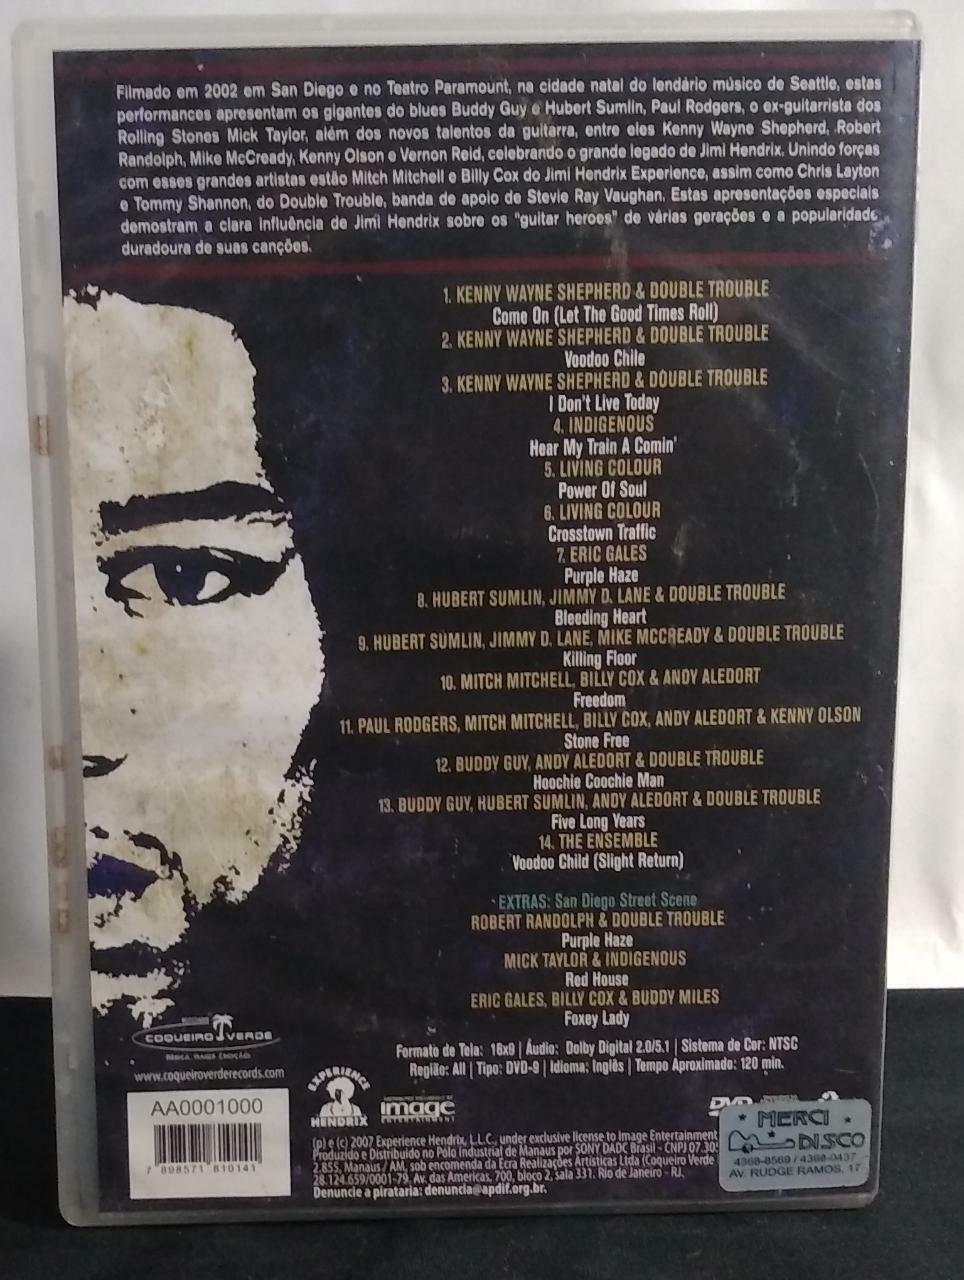 DVD - Jimi Hendrix - Experience Hendrix (Lacrado)